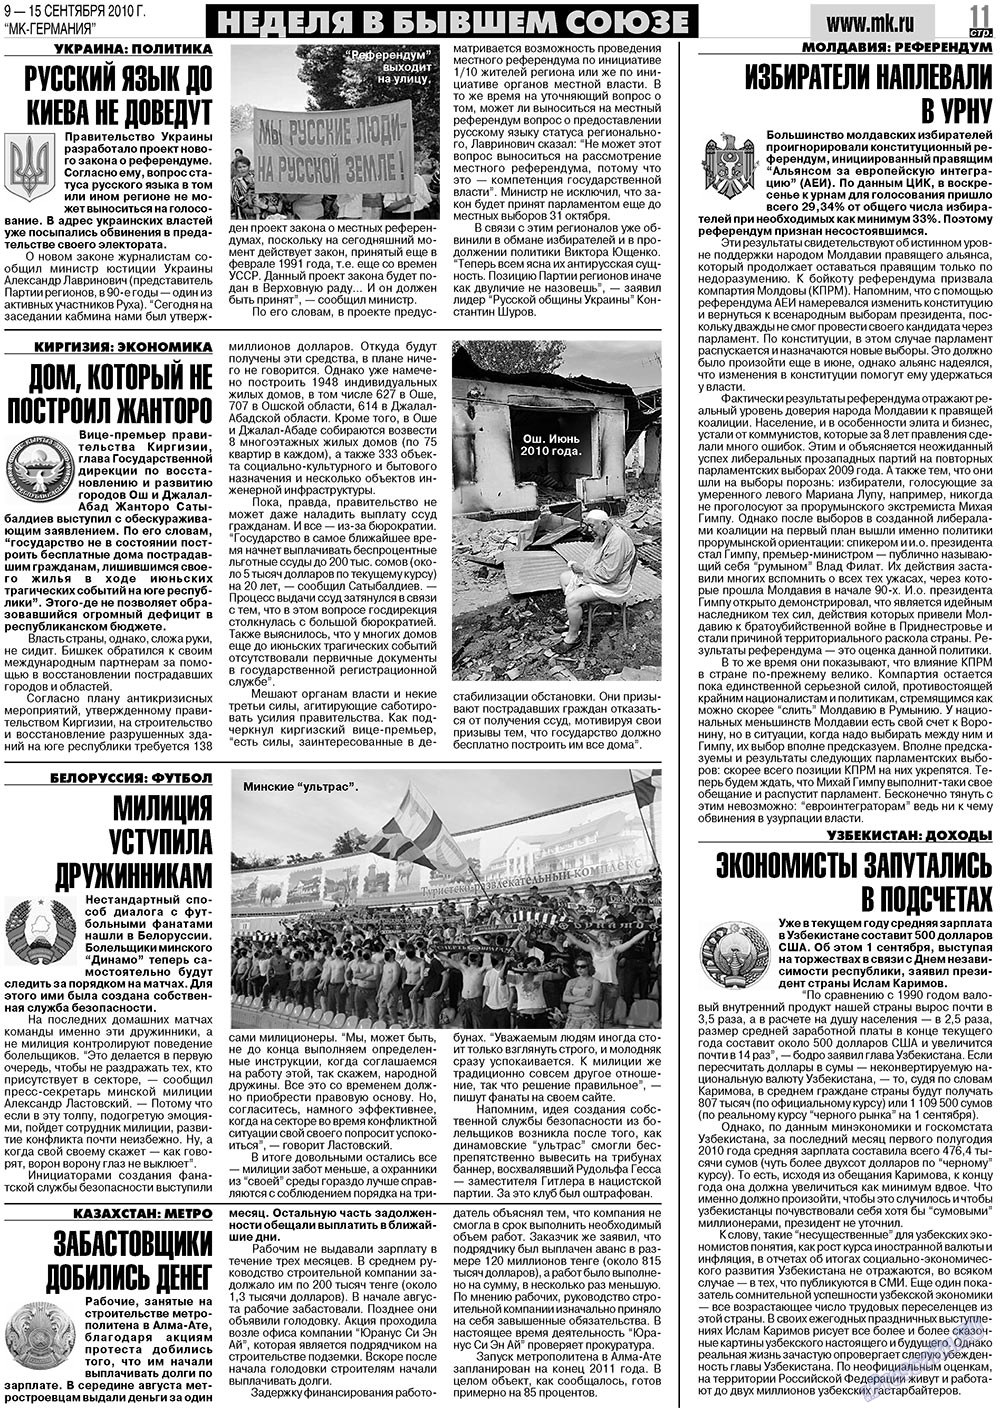 МК-Германия, газета. 2010 №37 стр.11